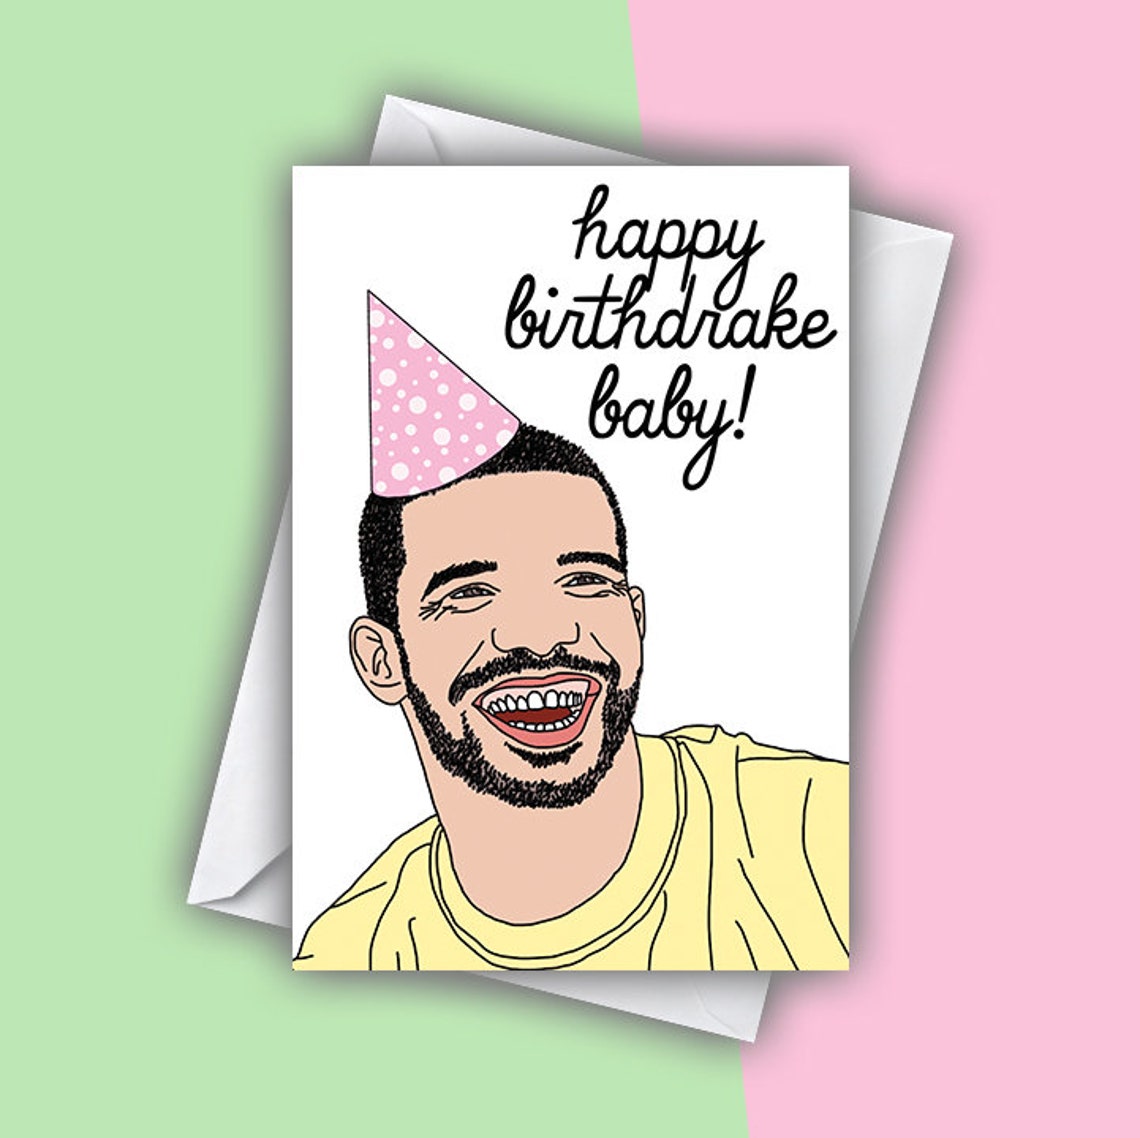 drake-birthday-card-happy-birthdrake-baby-card-birthday-card-etsy